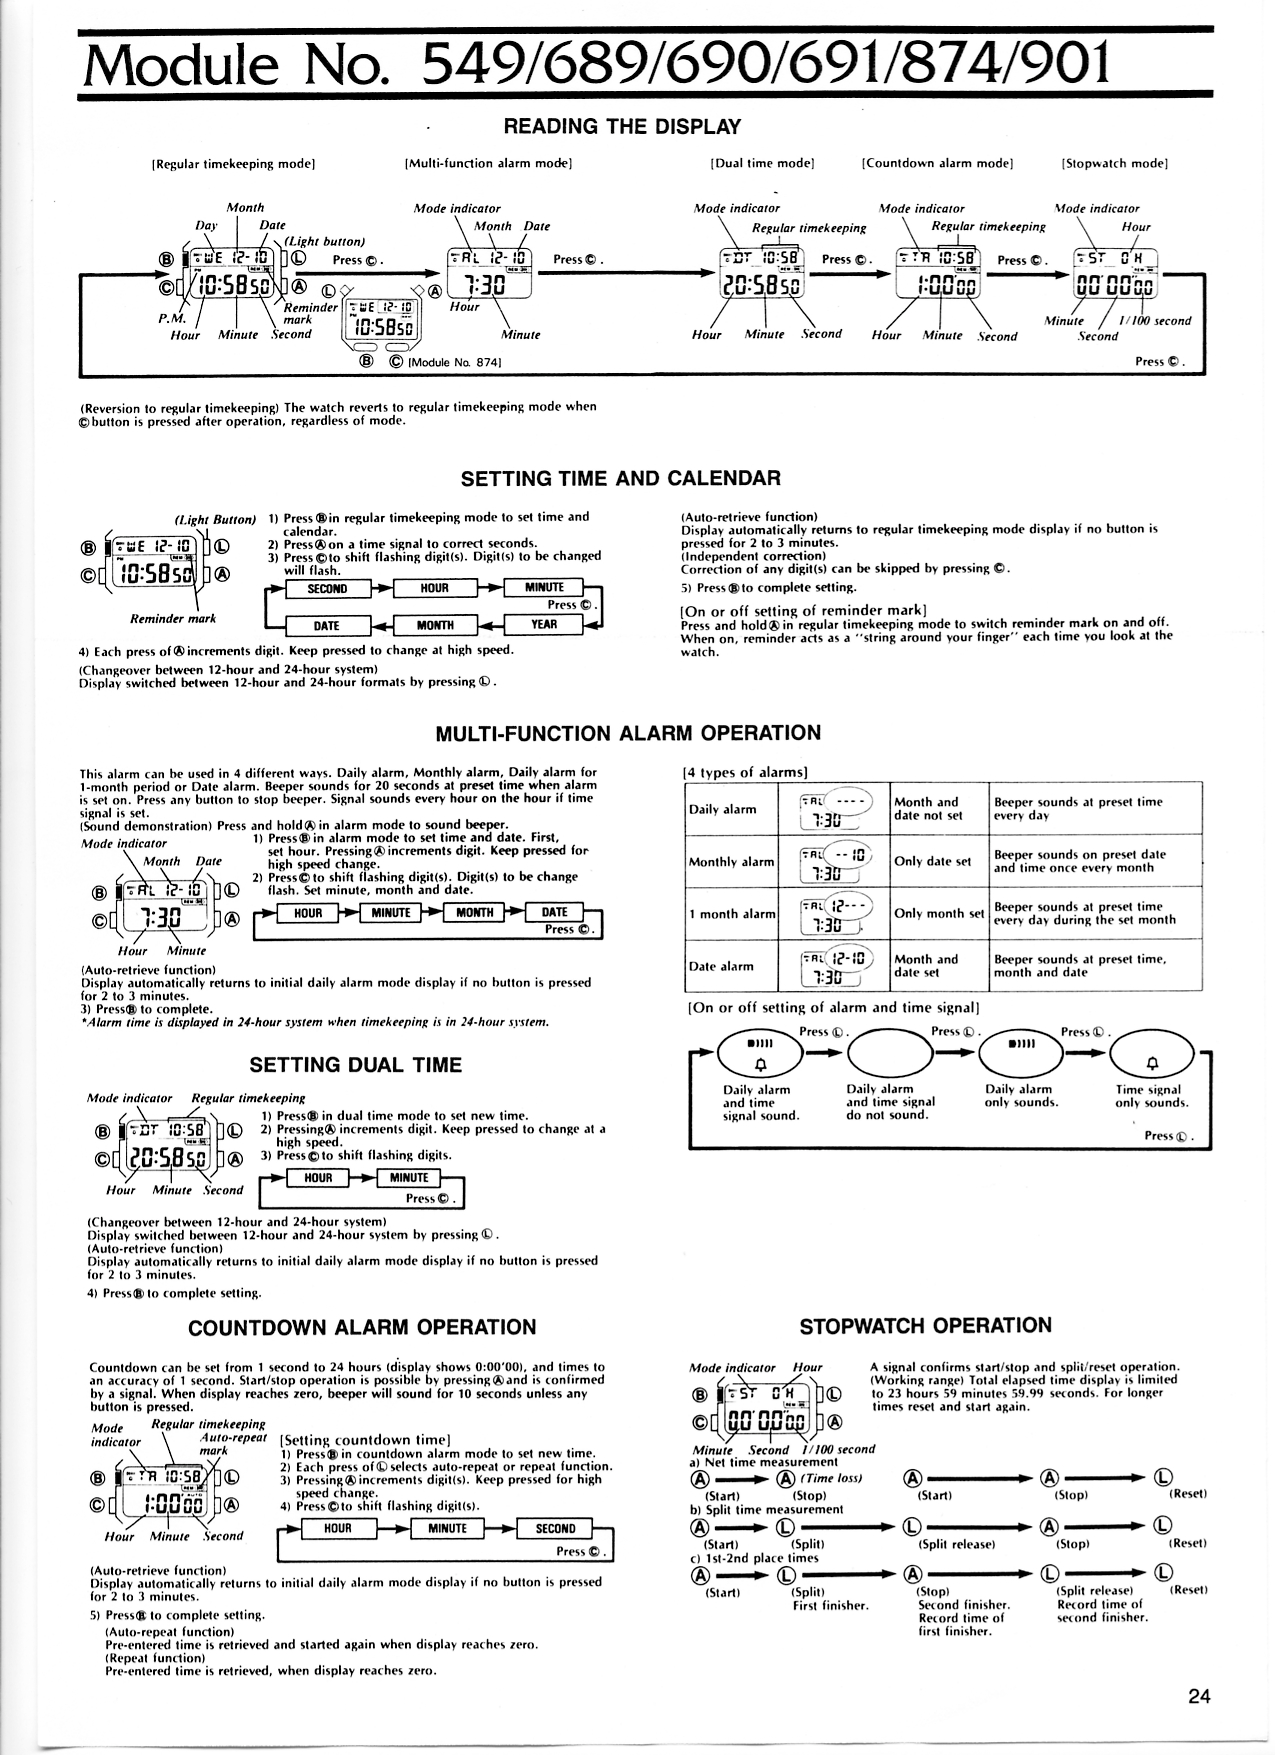 Casio QW-874, QW-901 User Manual